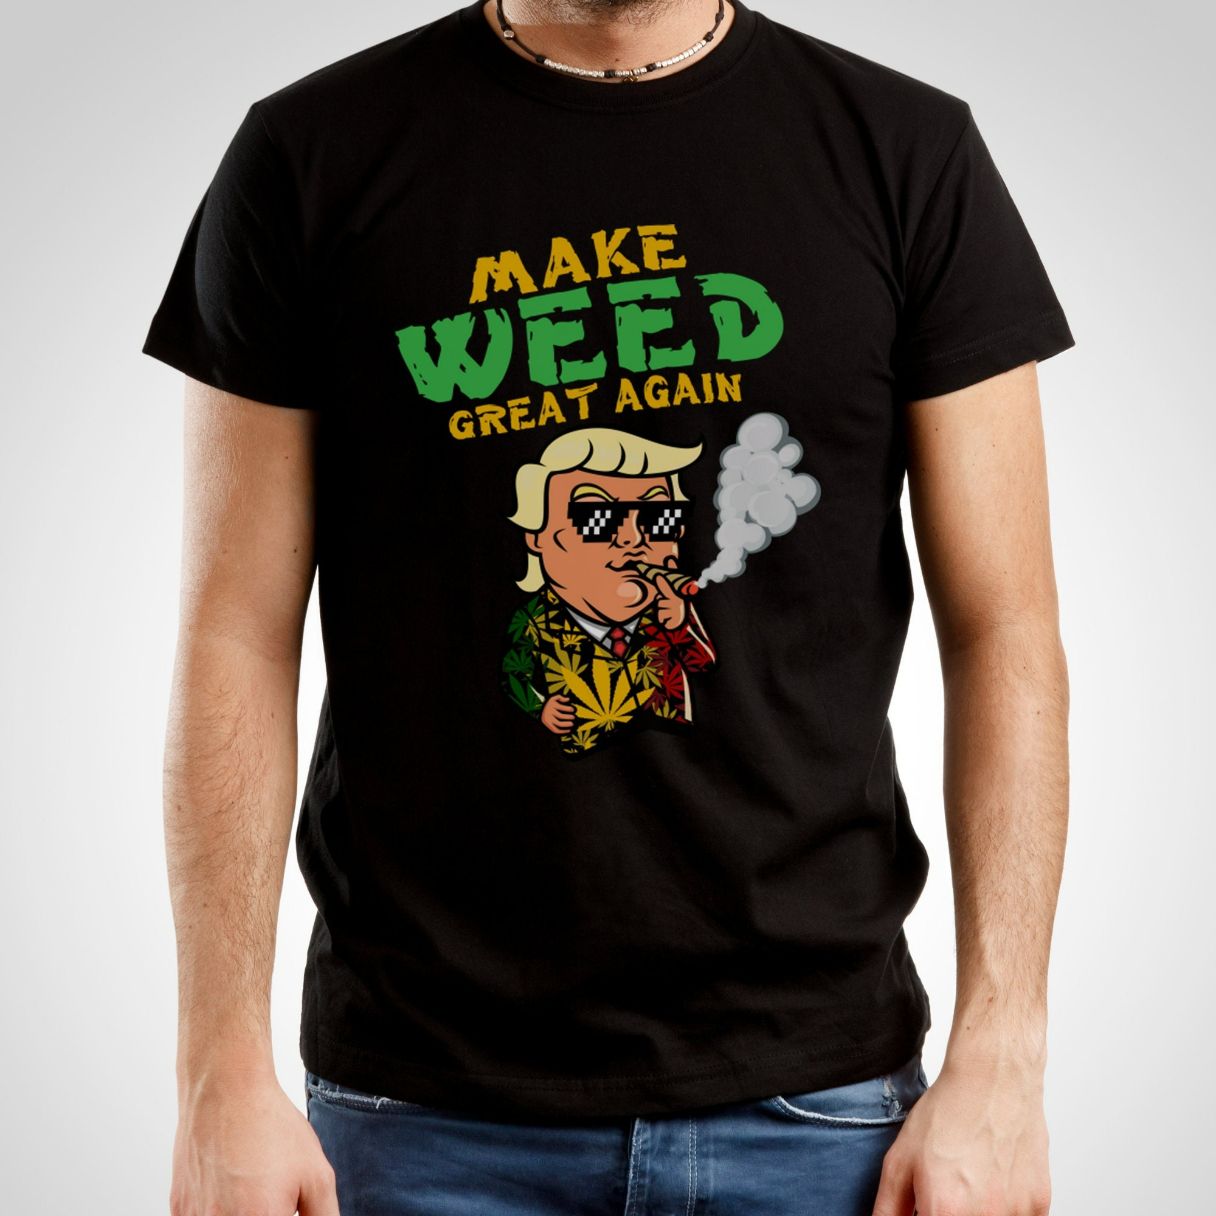 Make Weed Great Again T-Shirt